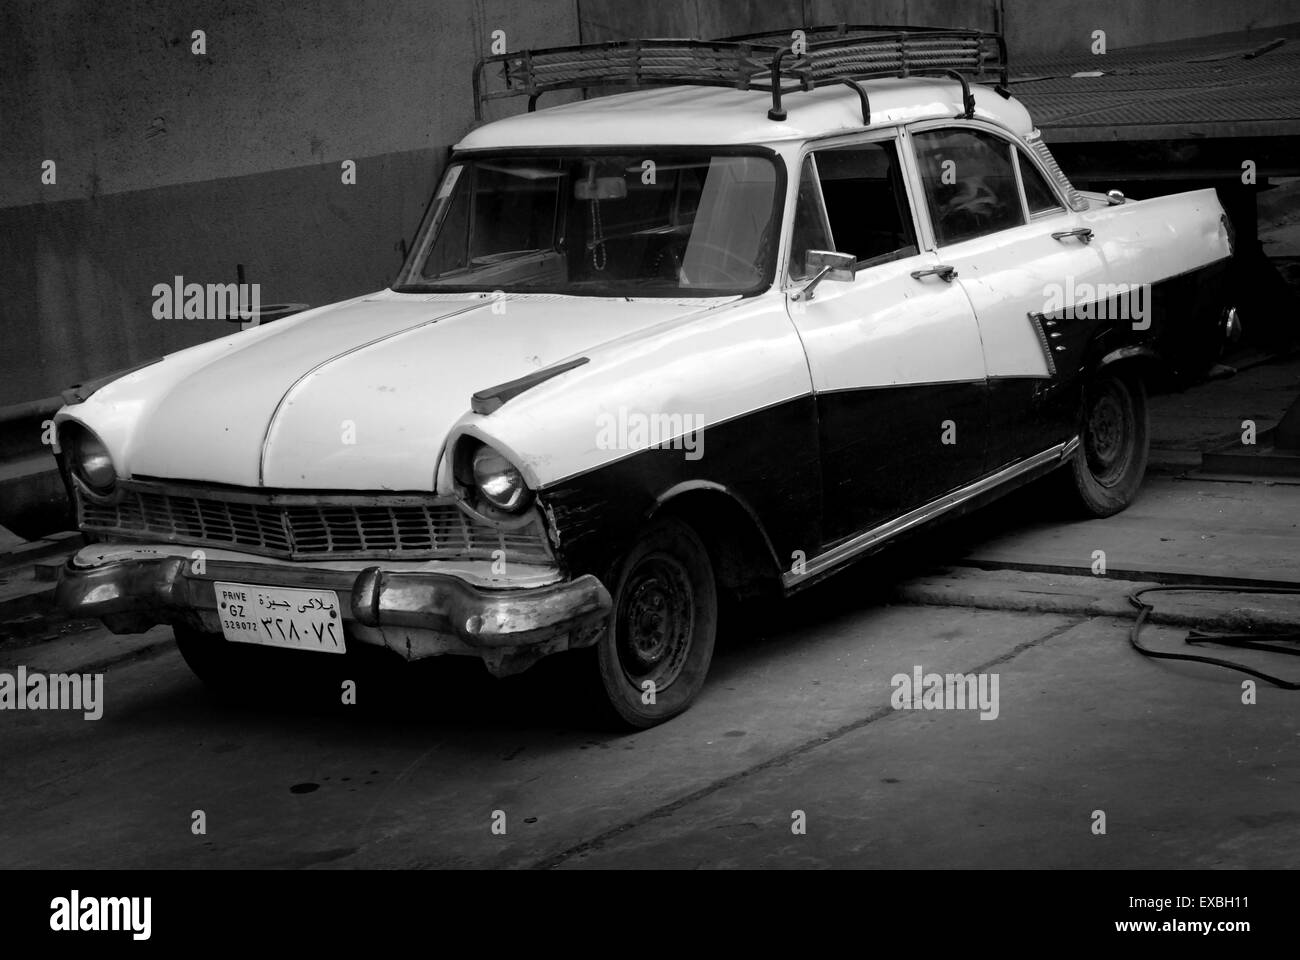 Old classic car, Cairo, Egypt Stock Photo